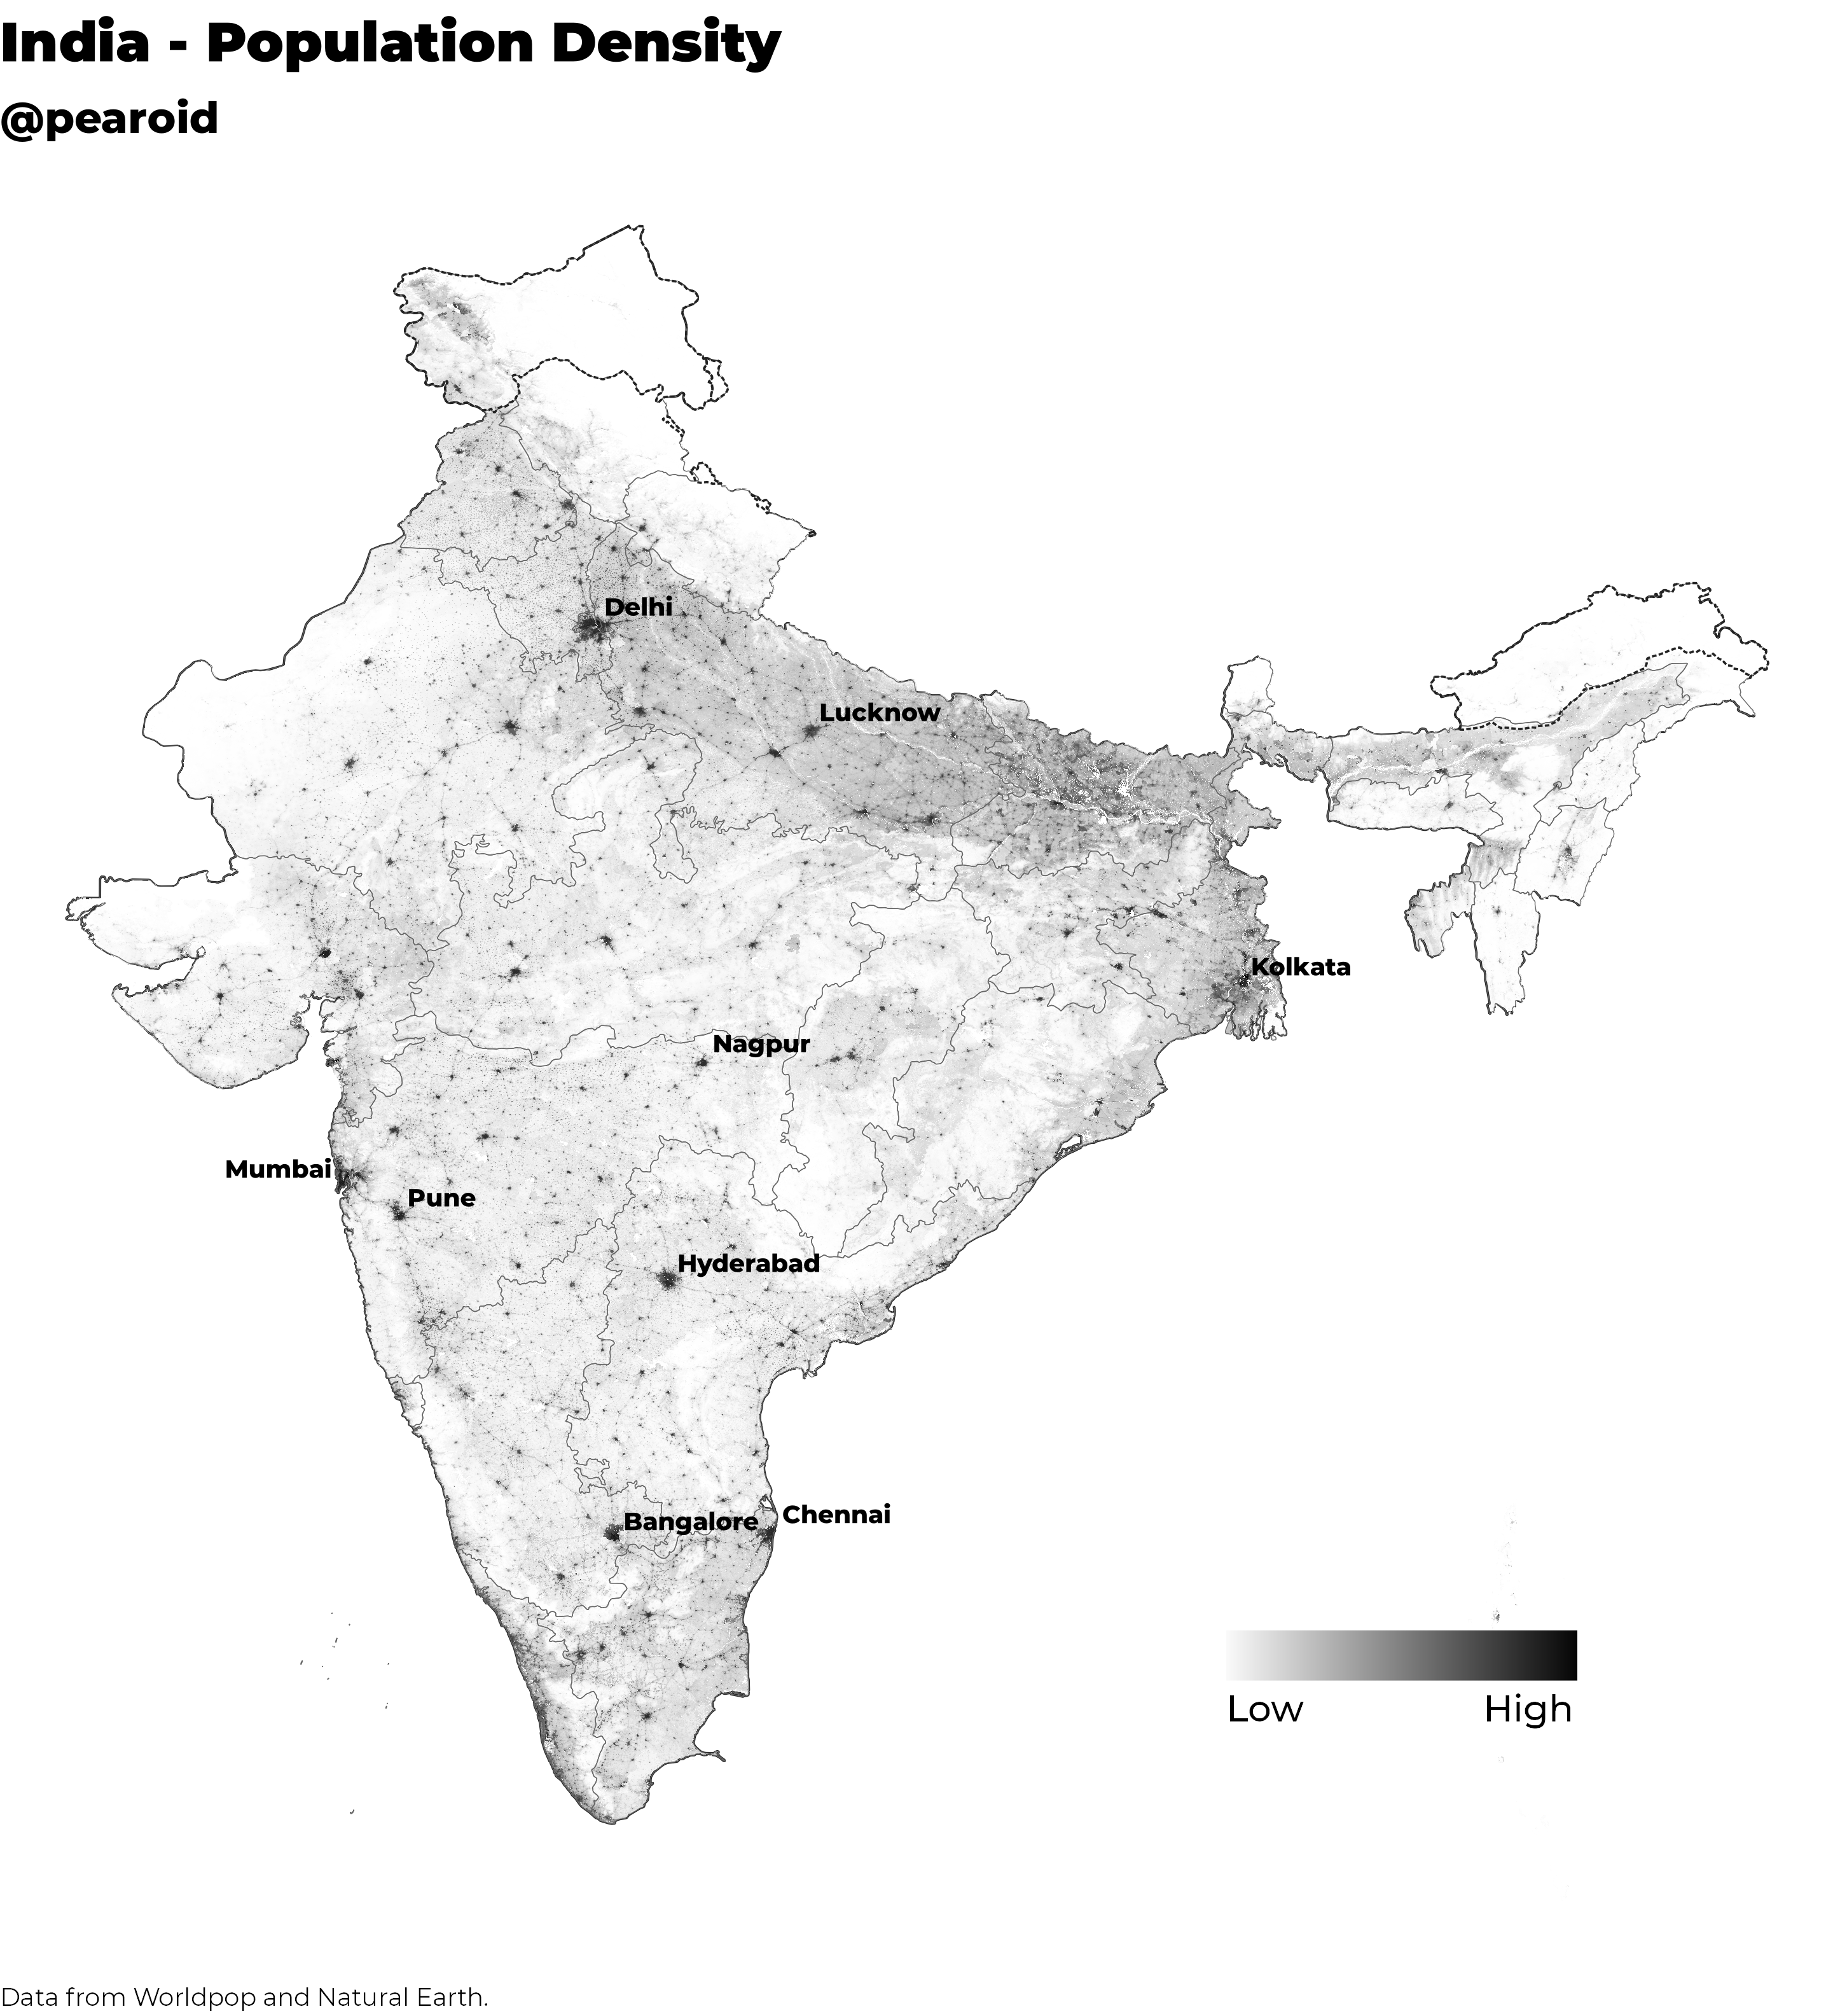 Population Density of India